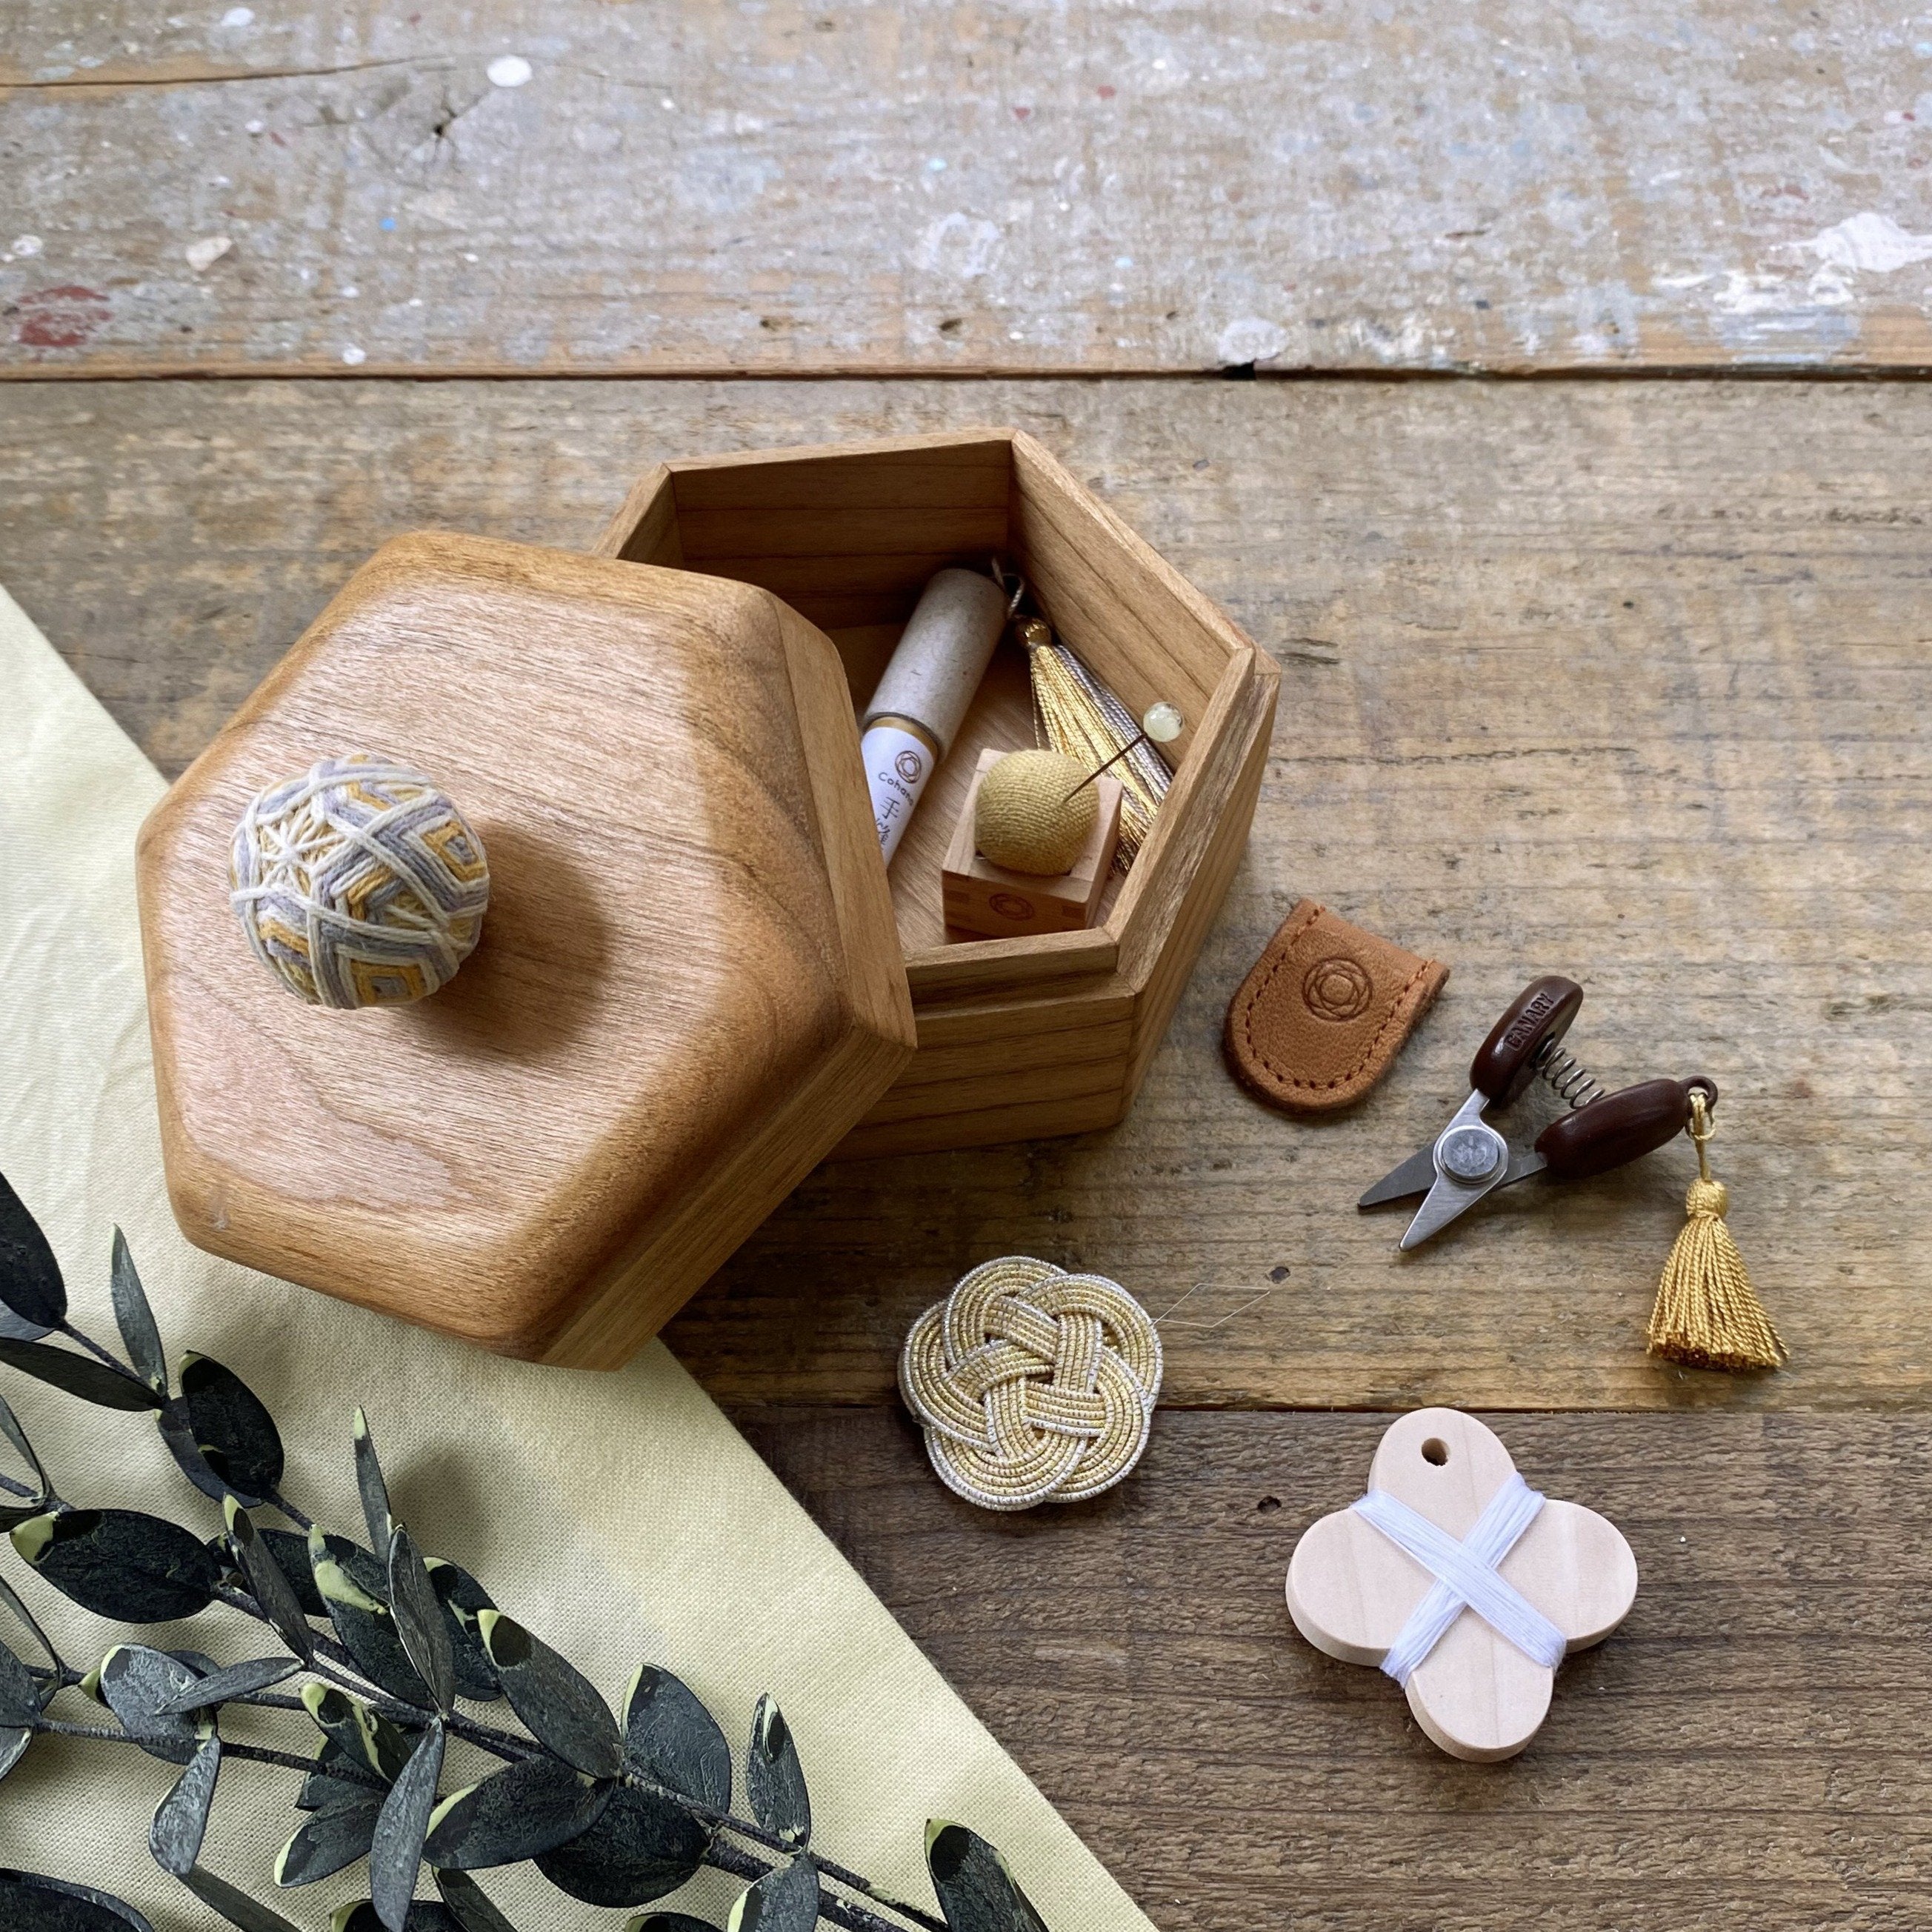 Craft the Perfect Gift: DIY Kit for Japanese Sa - Folksy